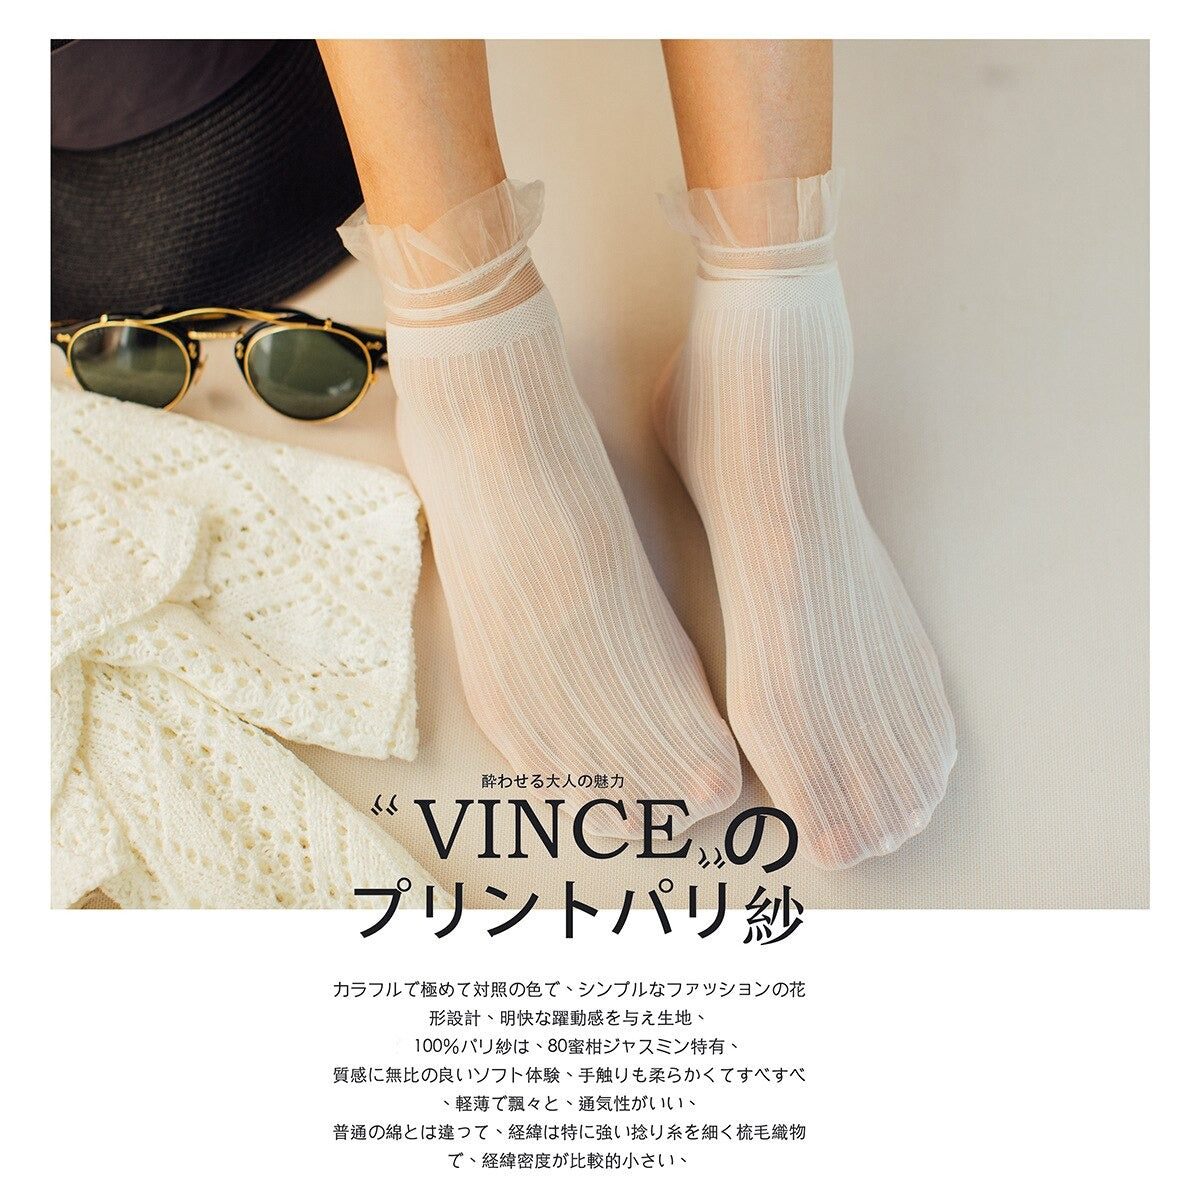 Women Soft Cute Long Socks For Women Mesh Thin Socks